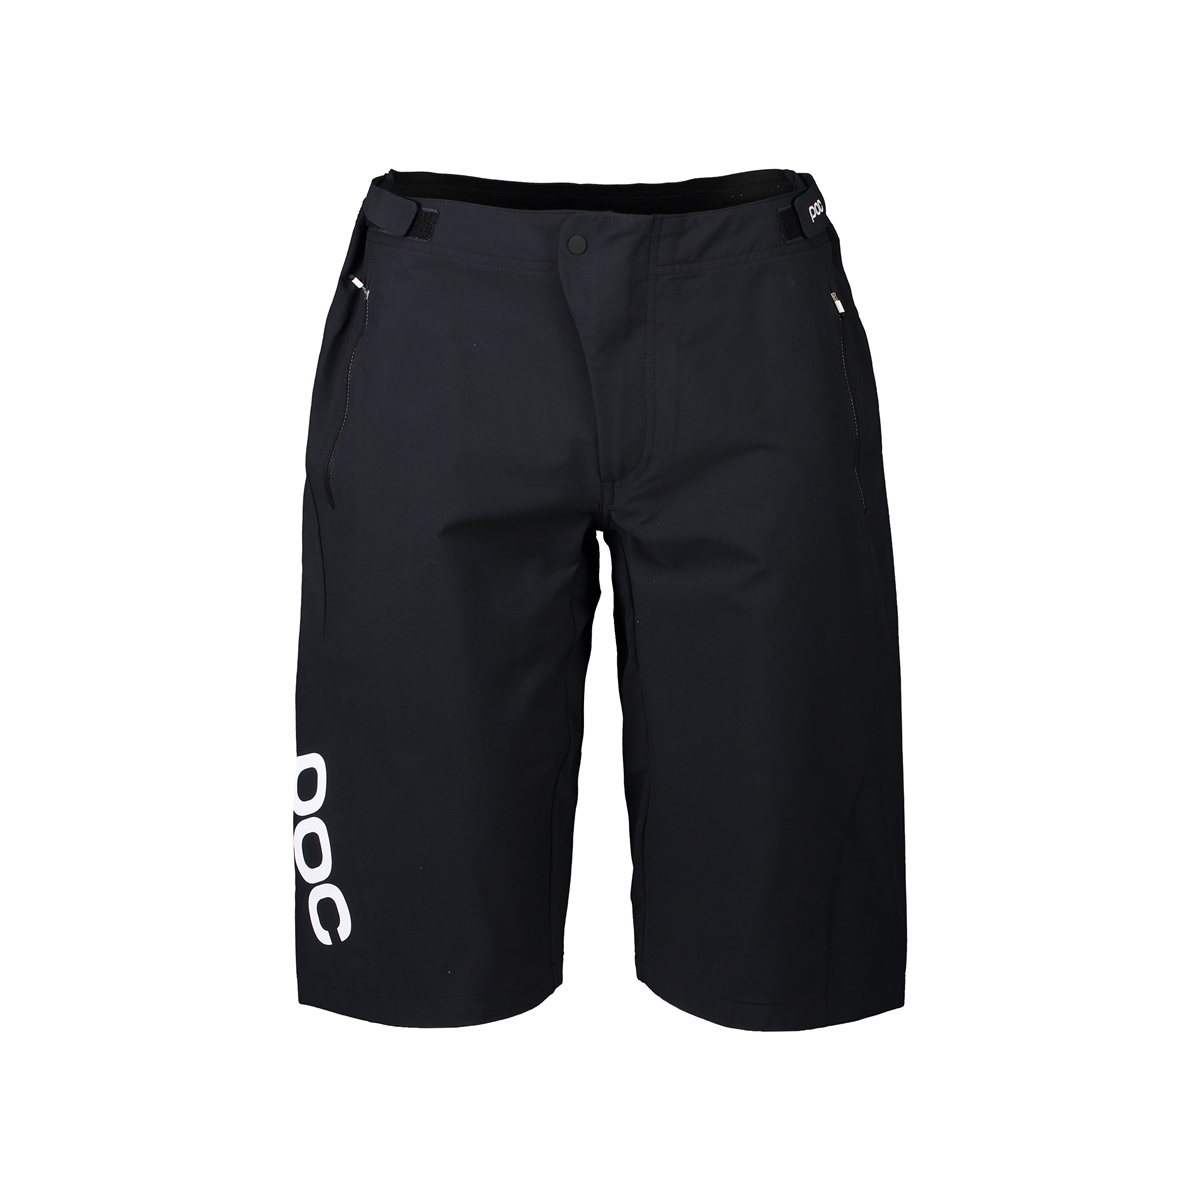 Shorts Essential Enduro preto tamanho S